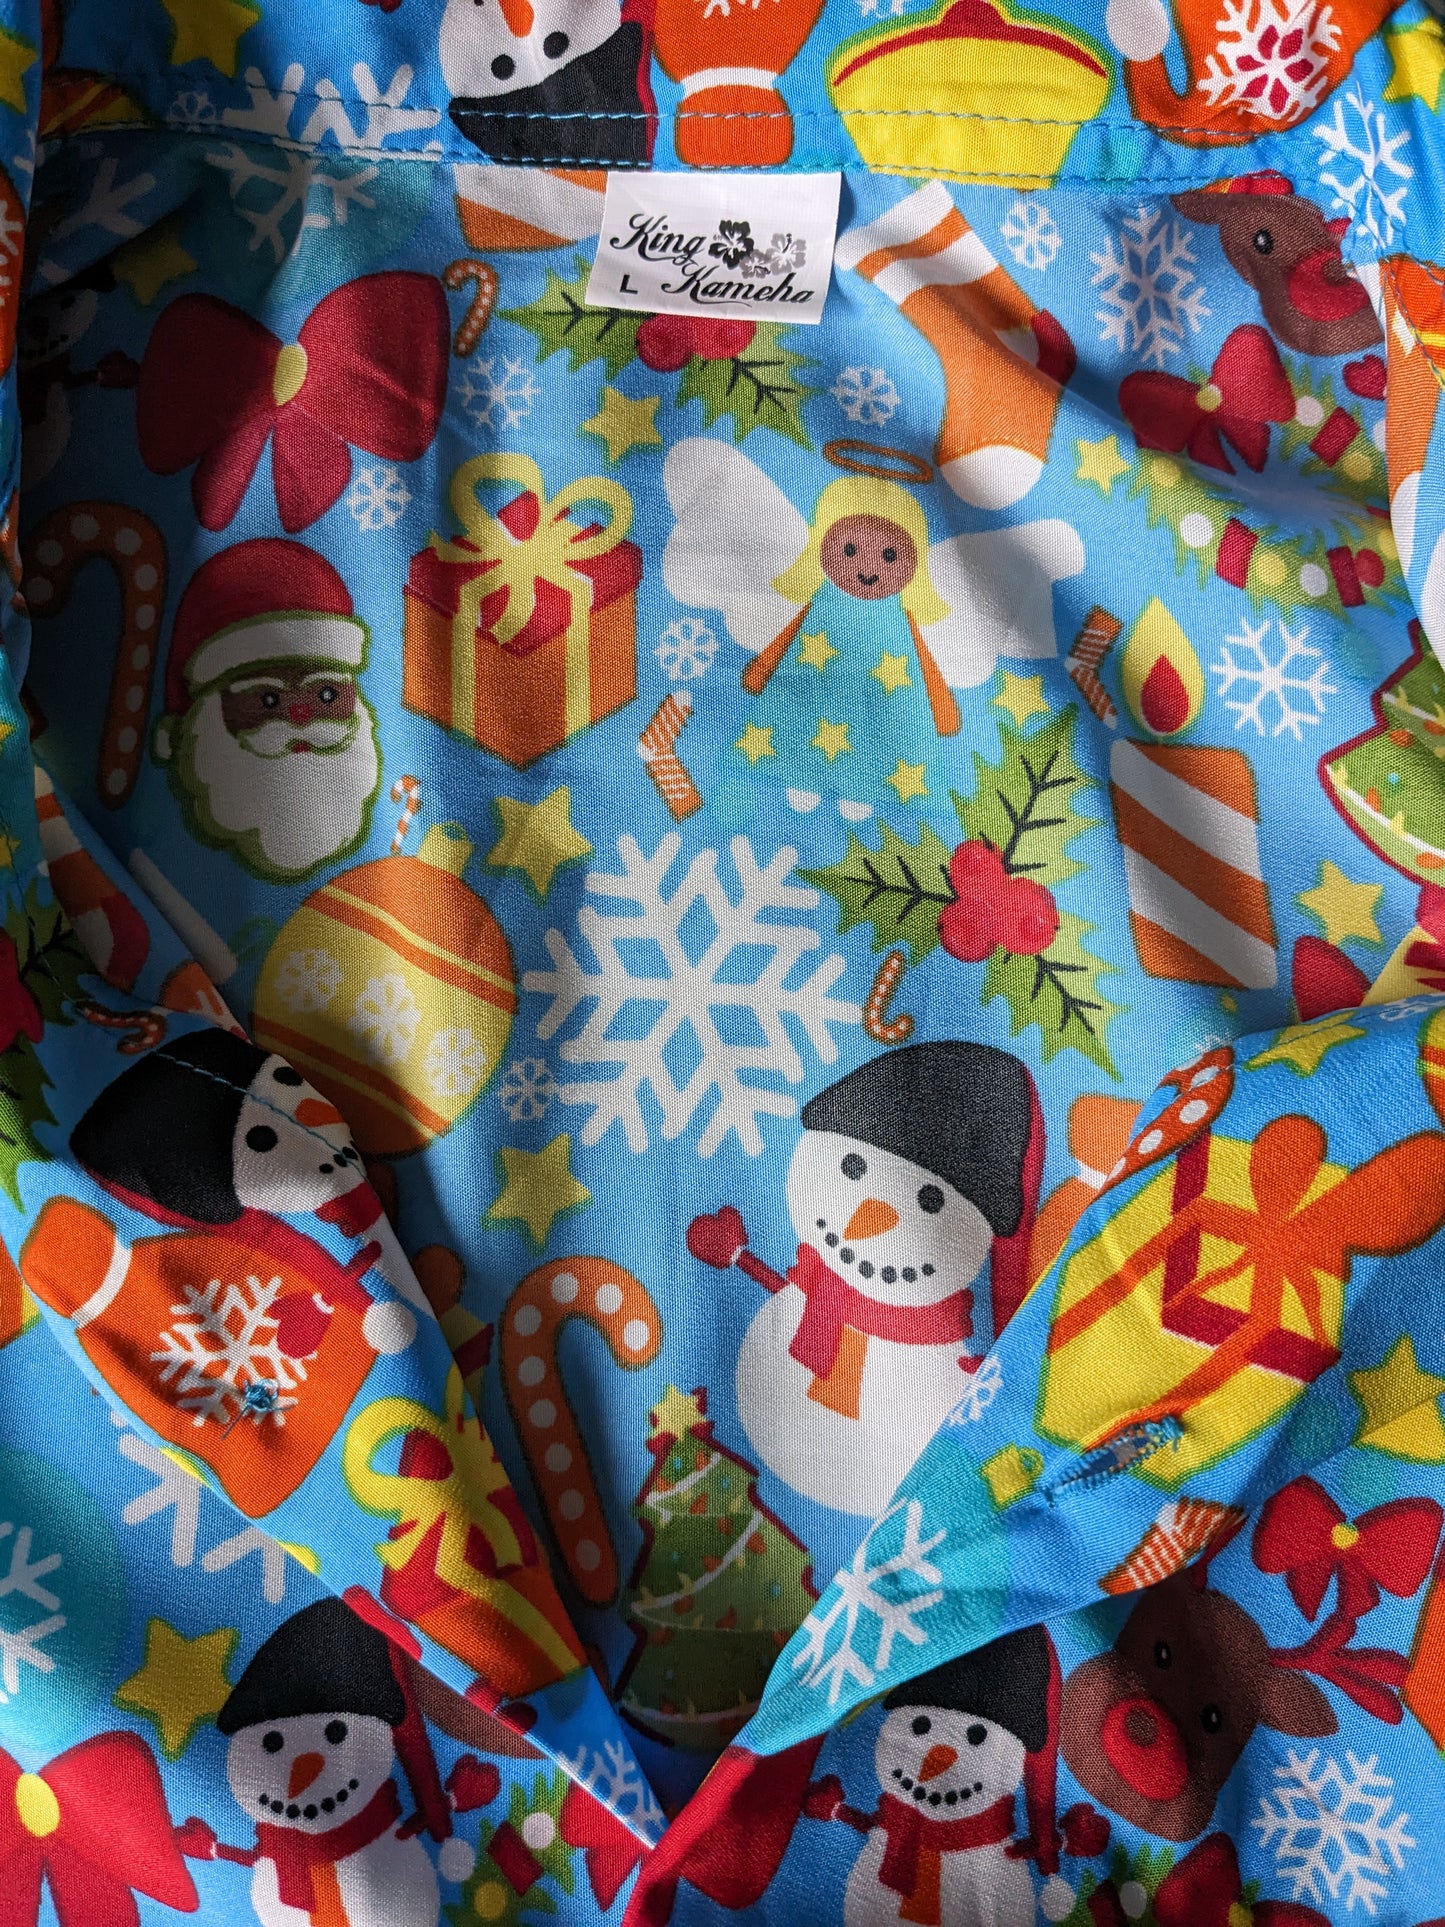 King Kameha shirt short sleeve. Christmas / winter print. Size L / XL.